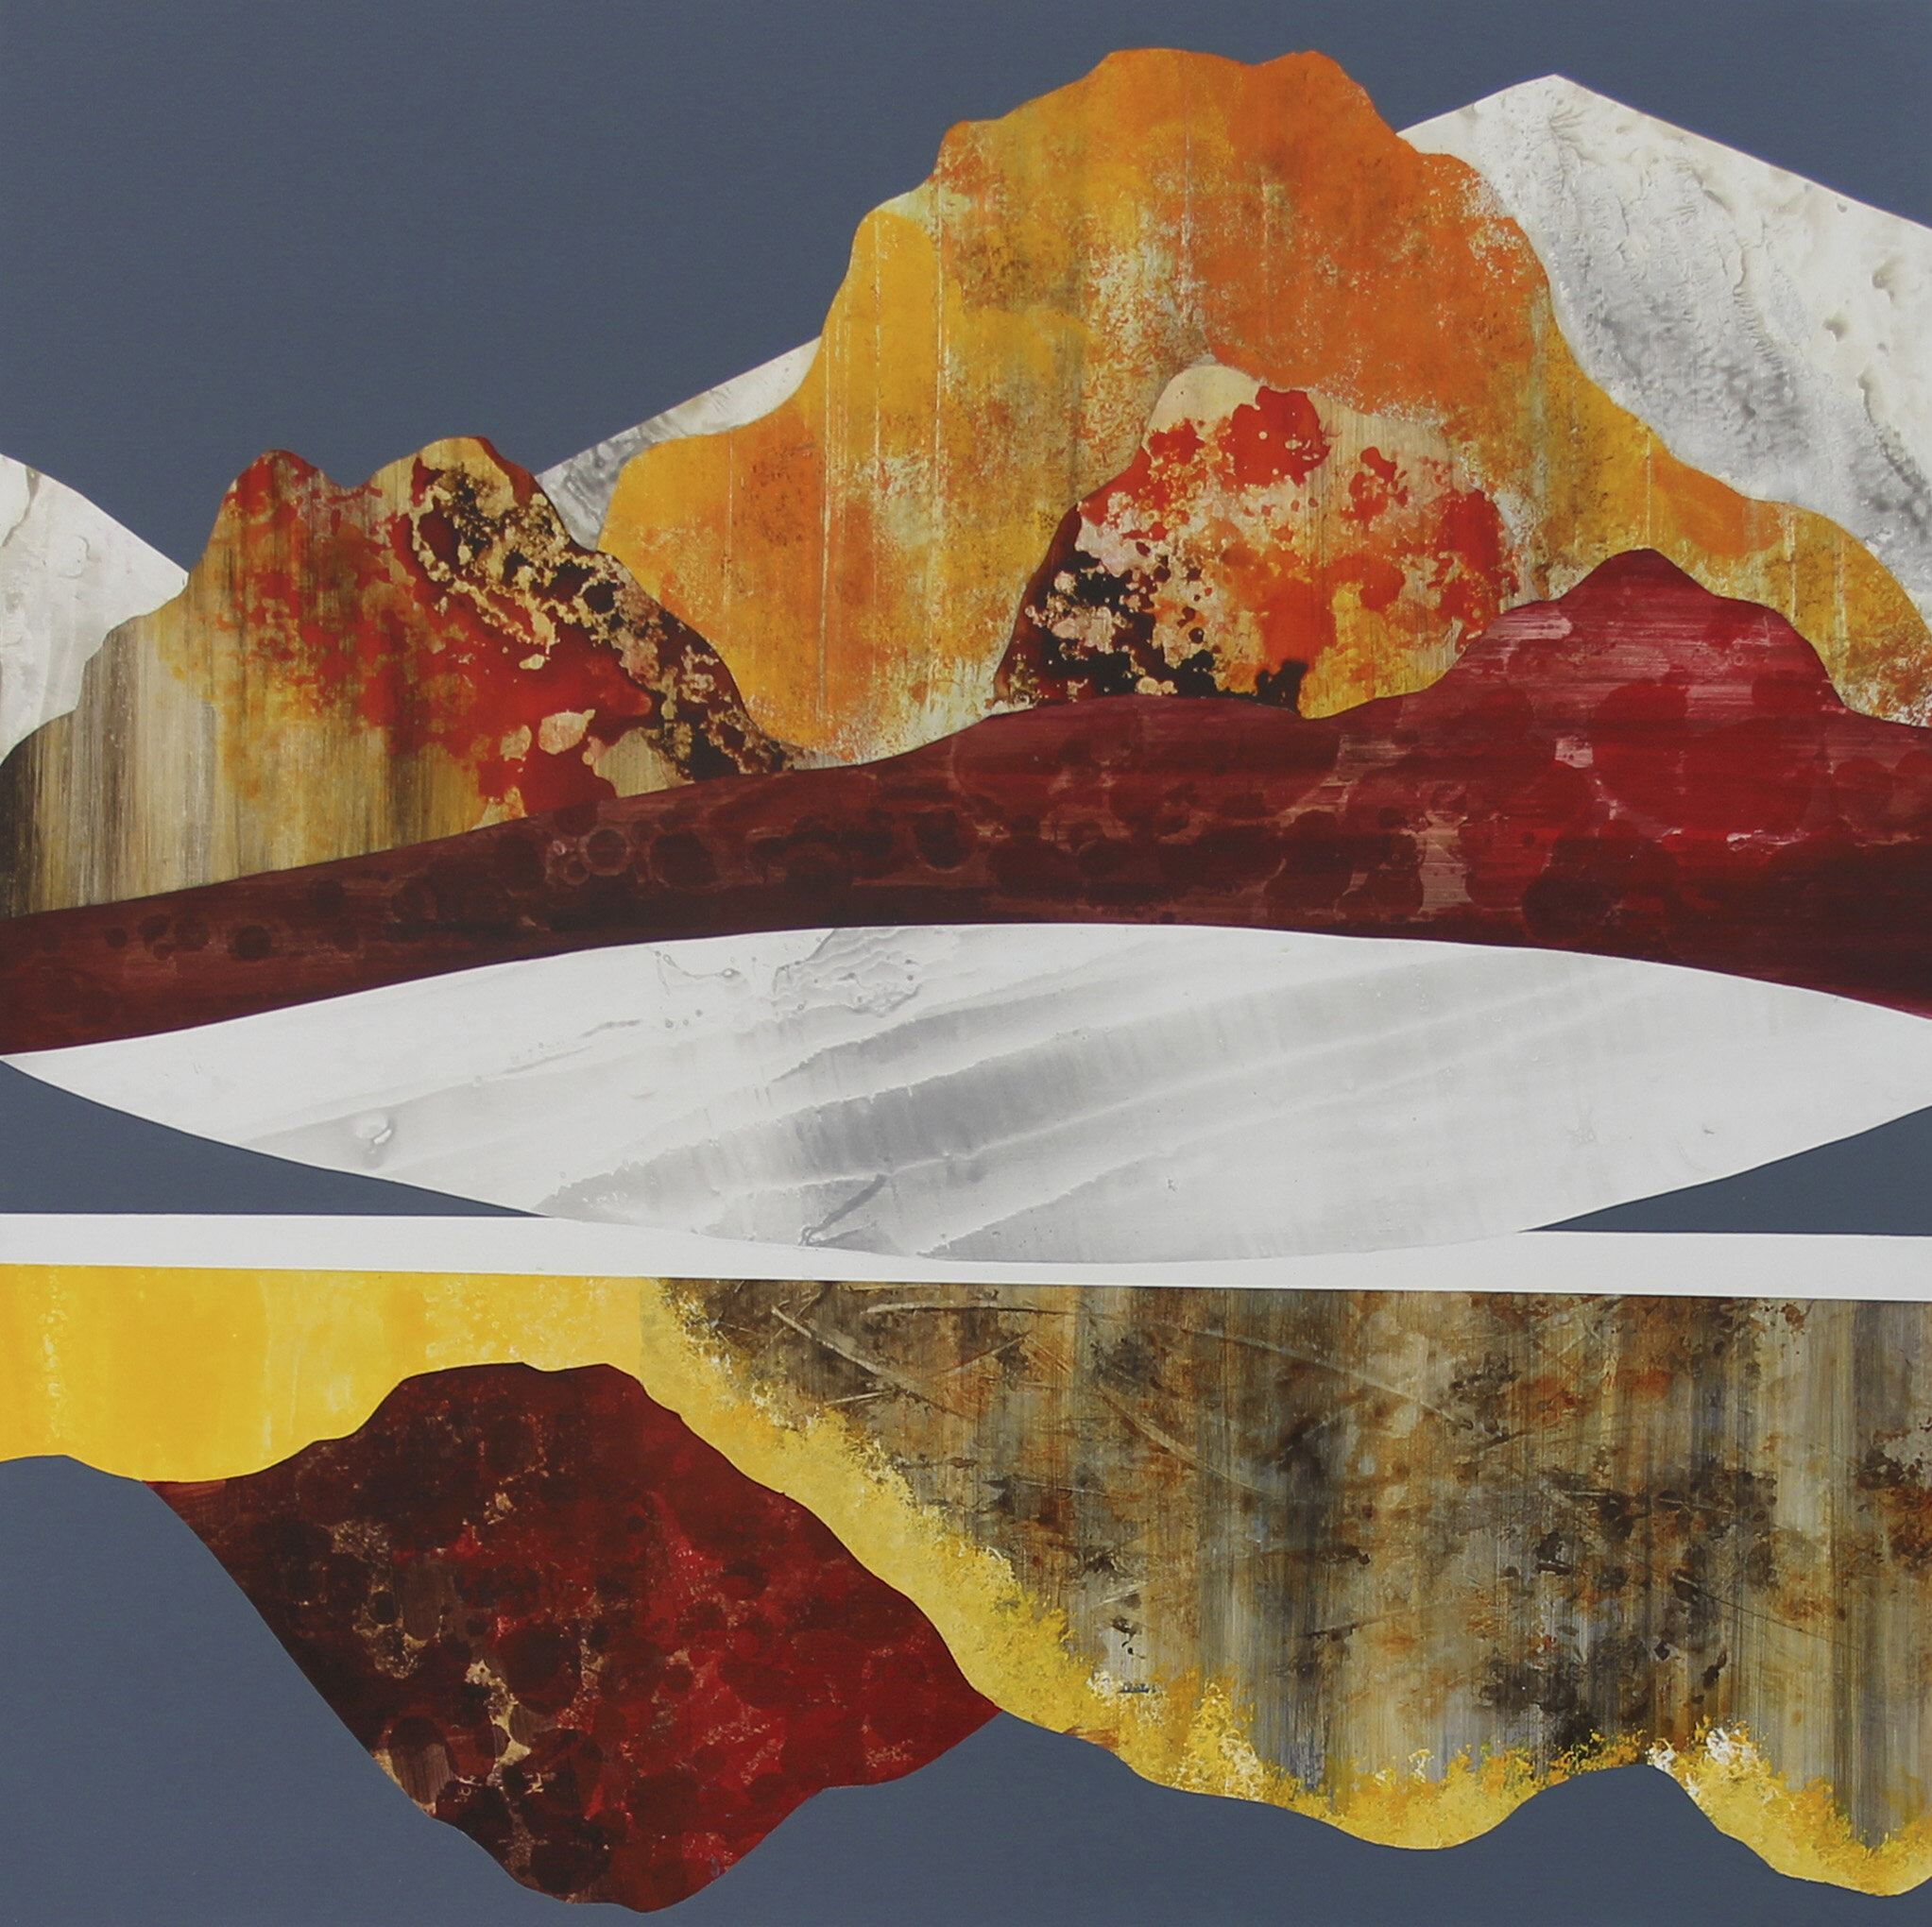  Mountain Chokecherry with Aspens  36x36”, Acrylic on Panel. 2020.    SOLD   